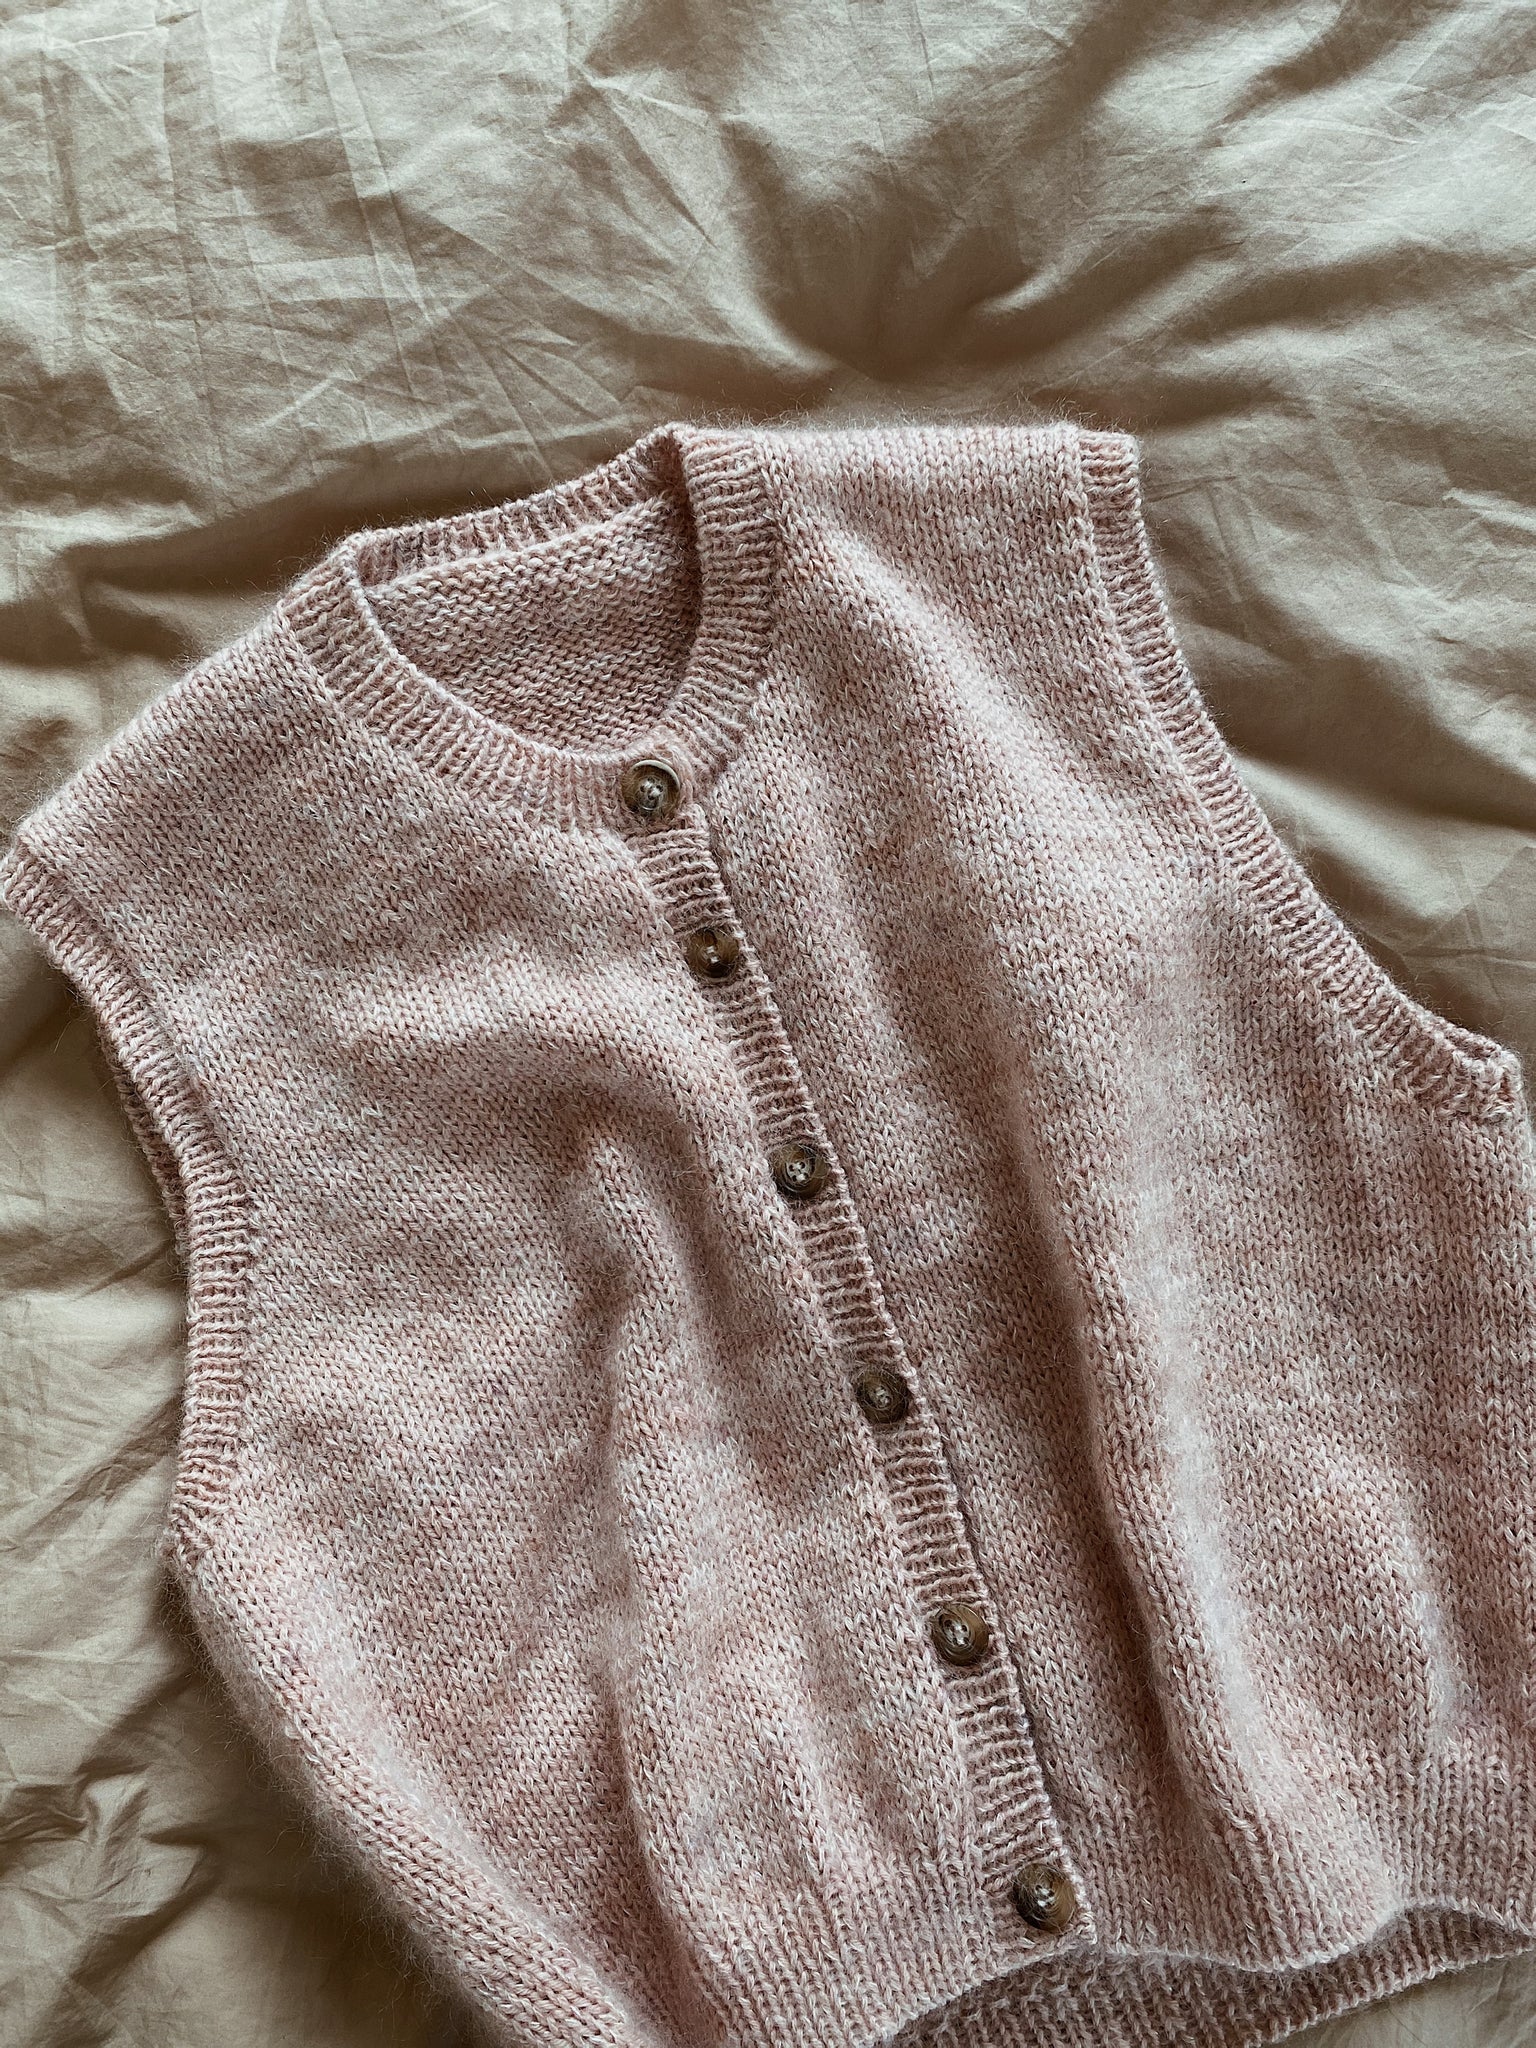 Vest No. 4 - My Favourite Things Knitwear - Strikkekit